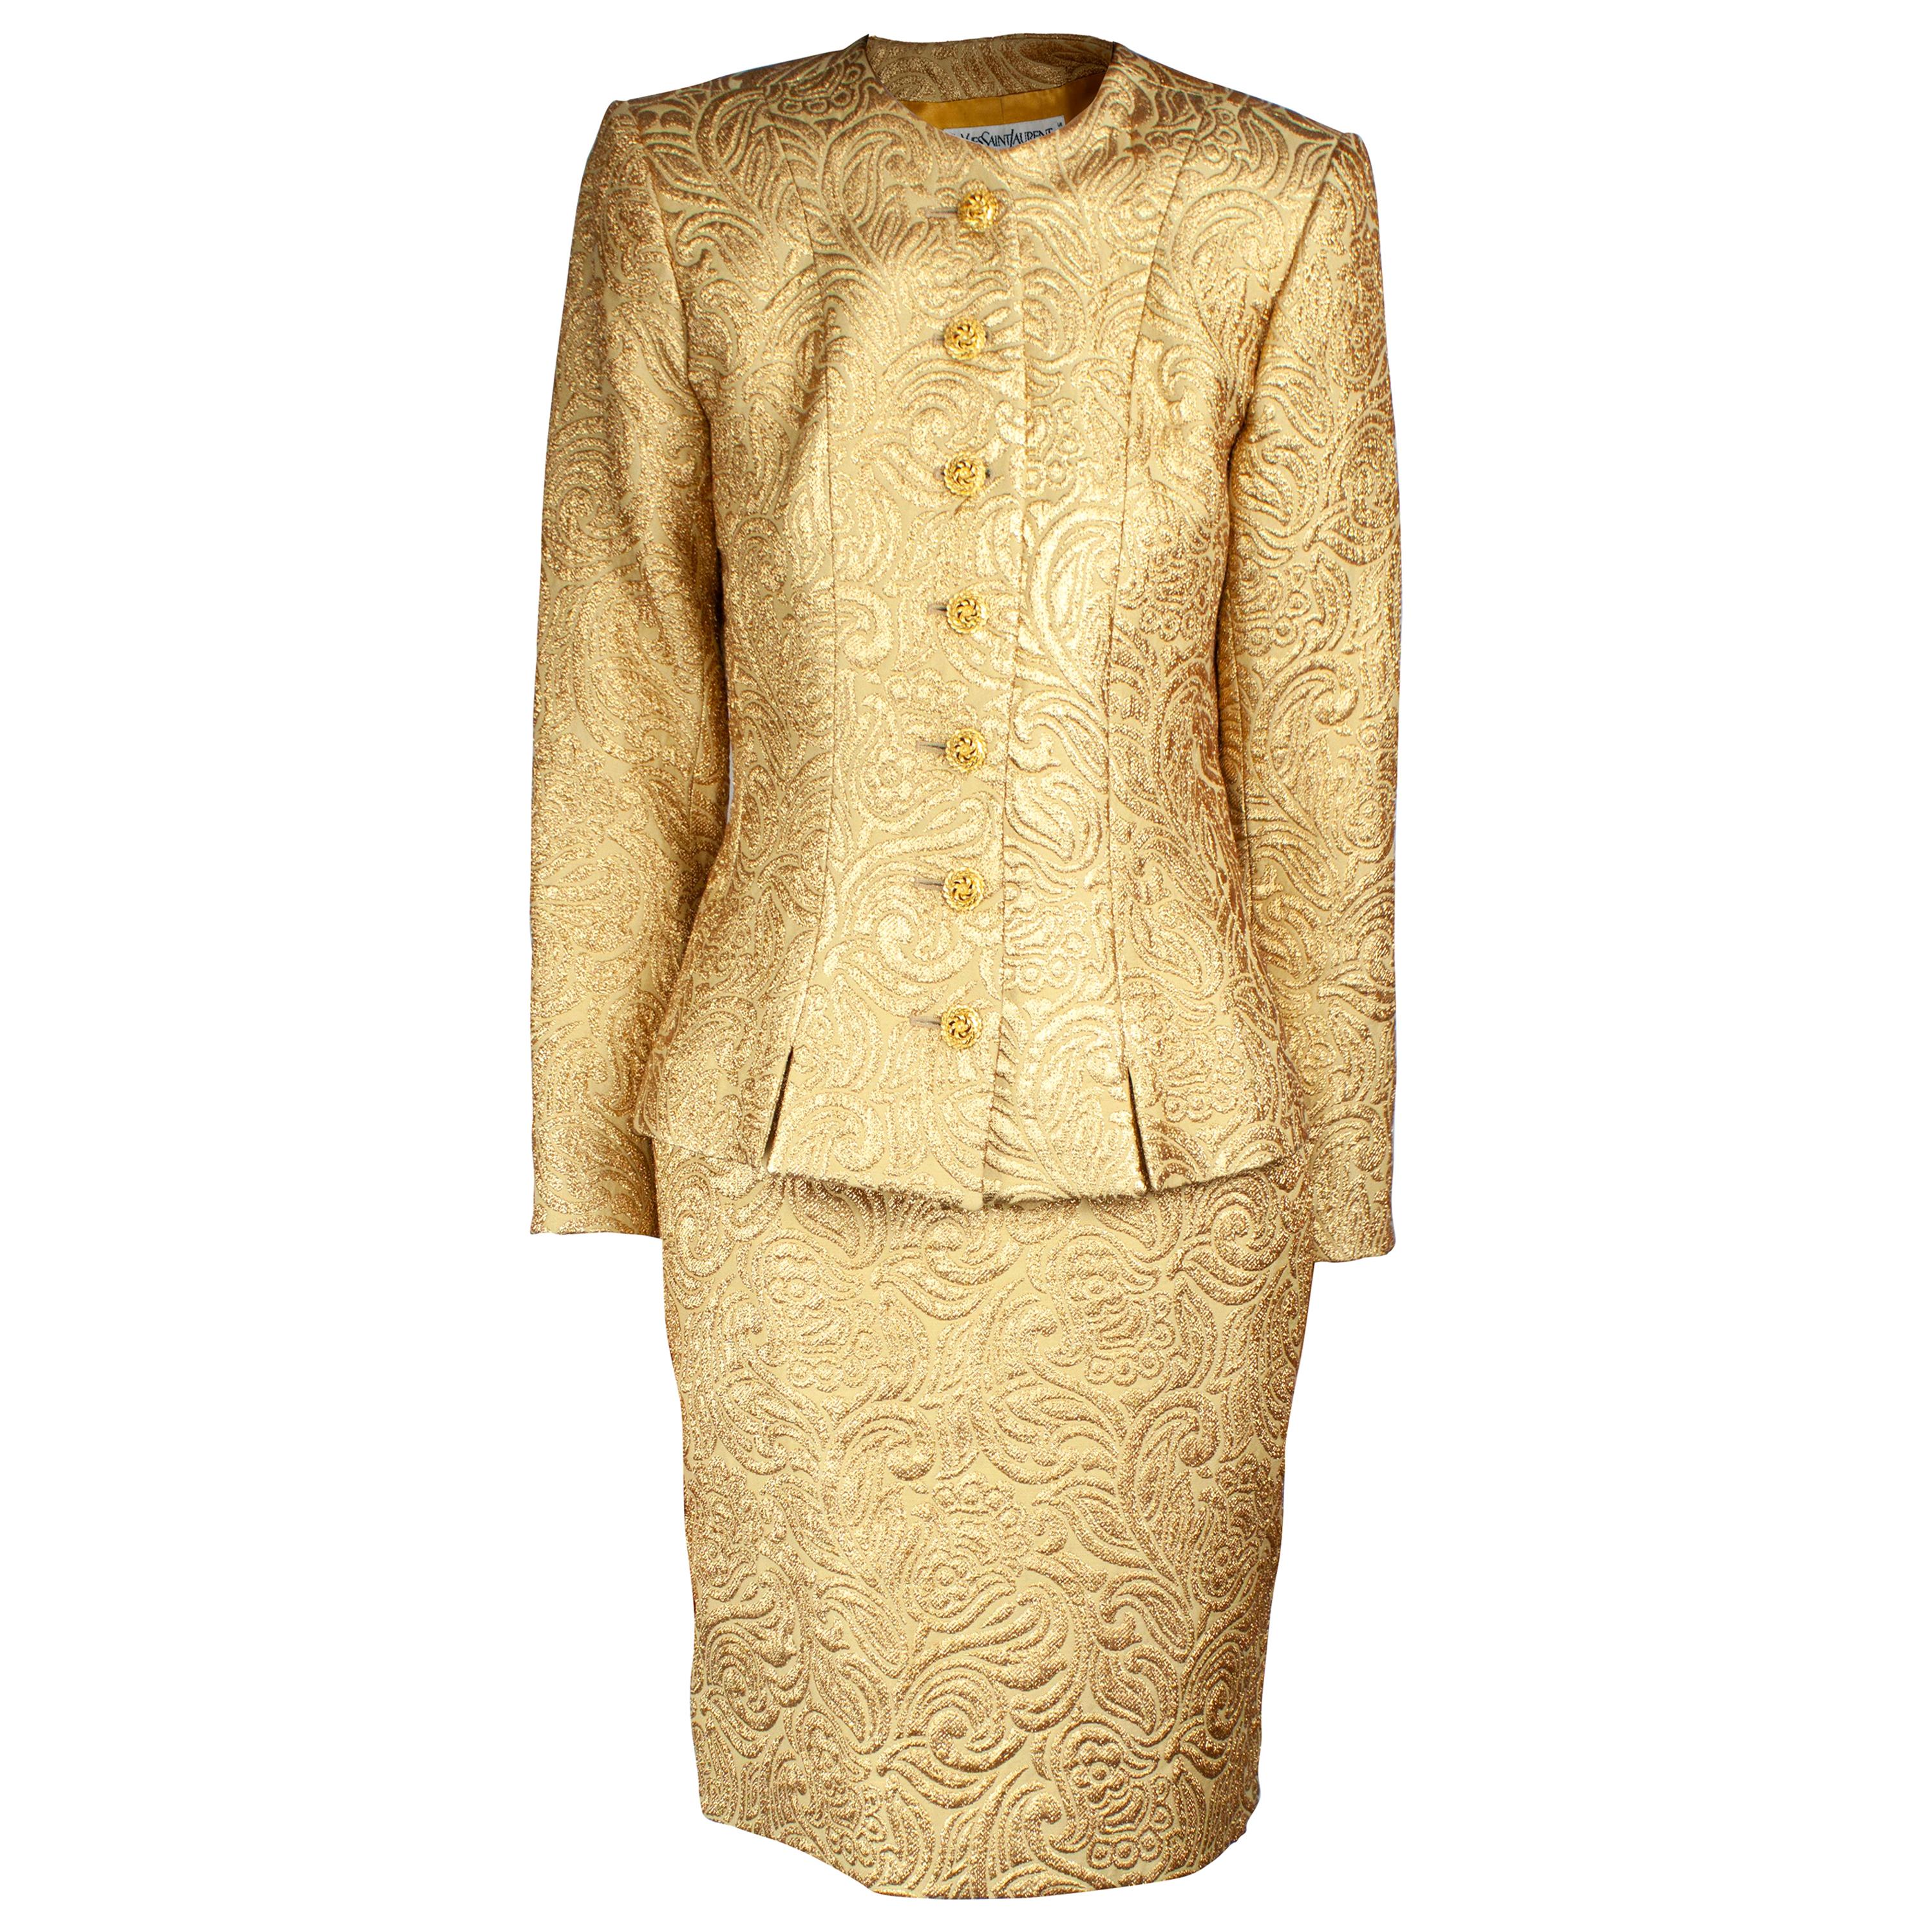 Yves Saint Laurent Chinese collection gold brocade skirt ensemble.circa 1980